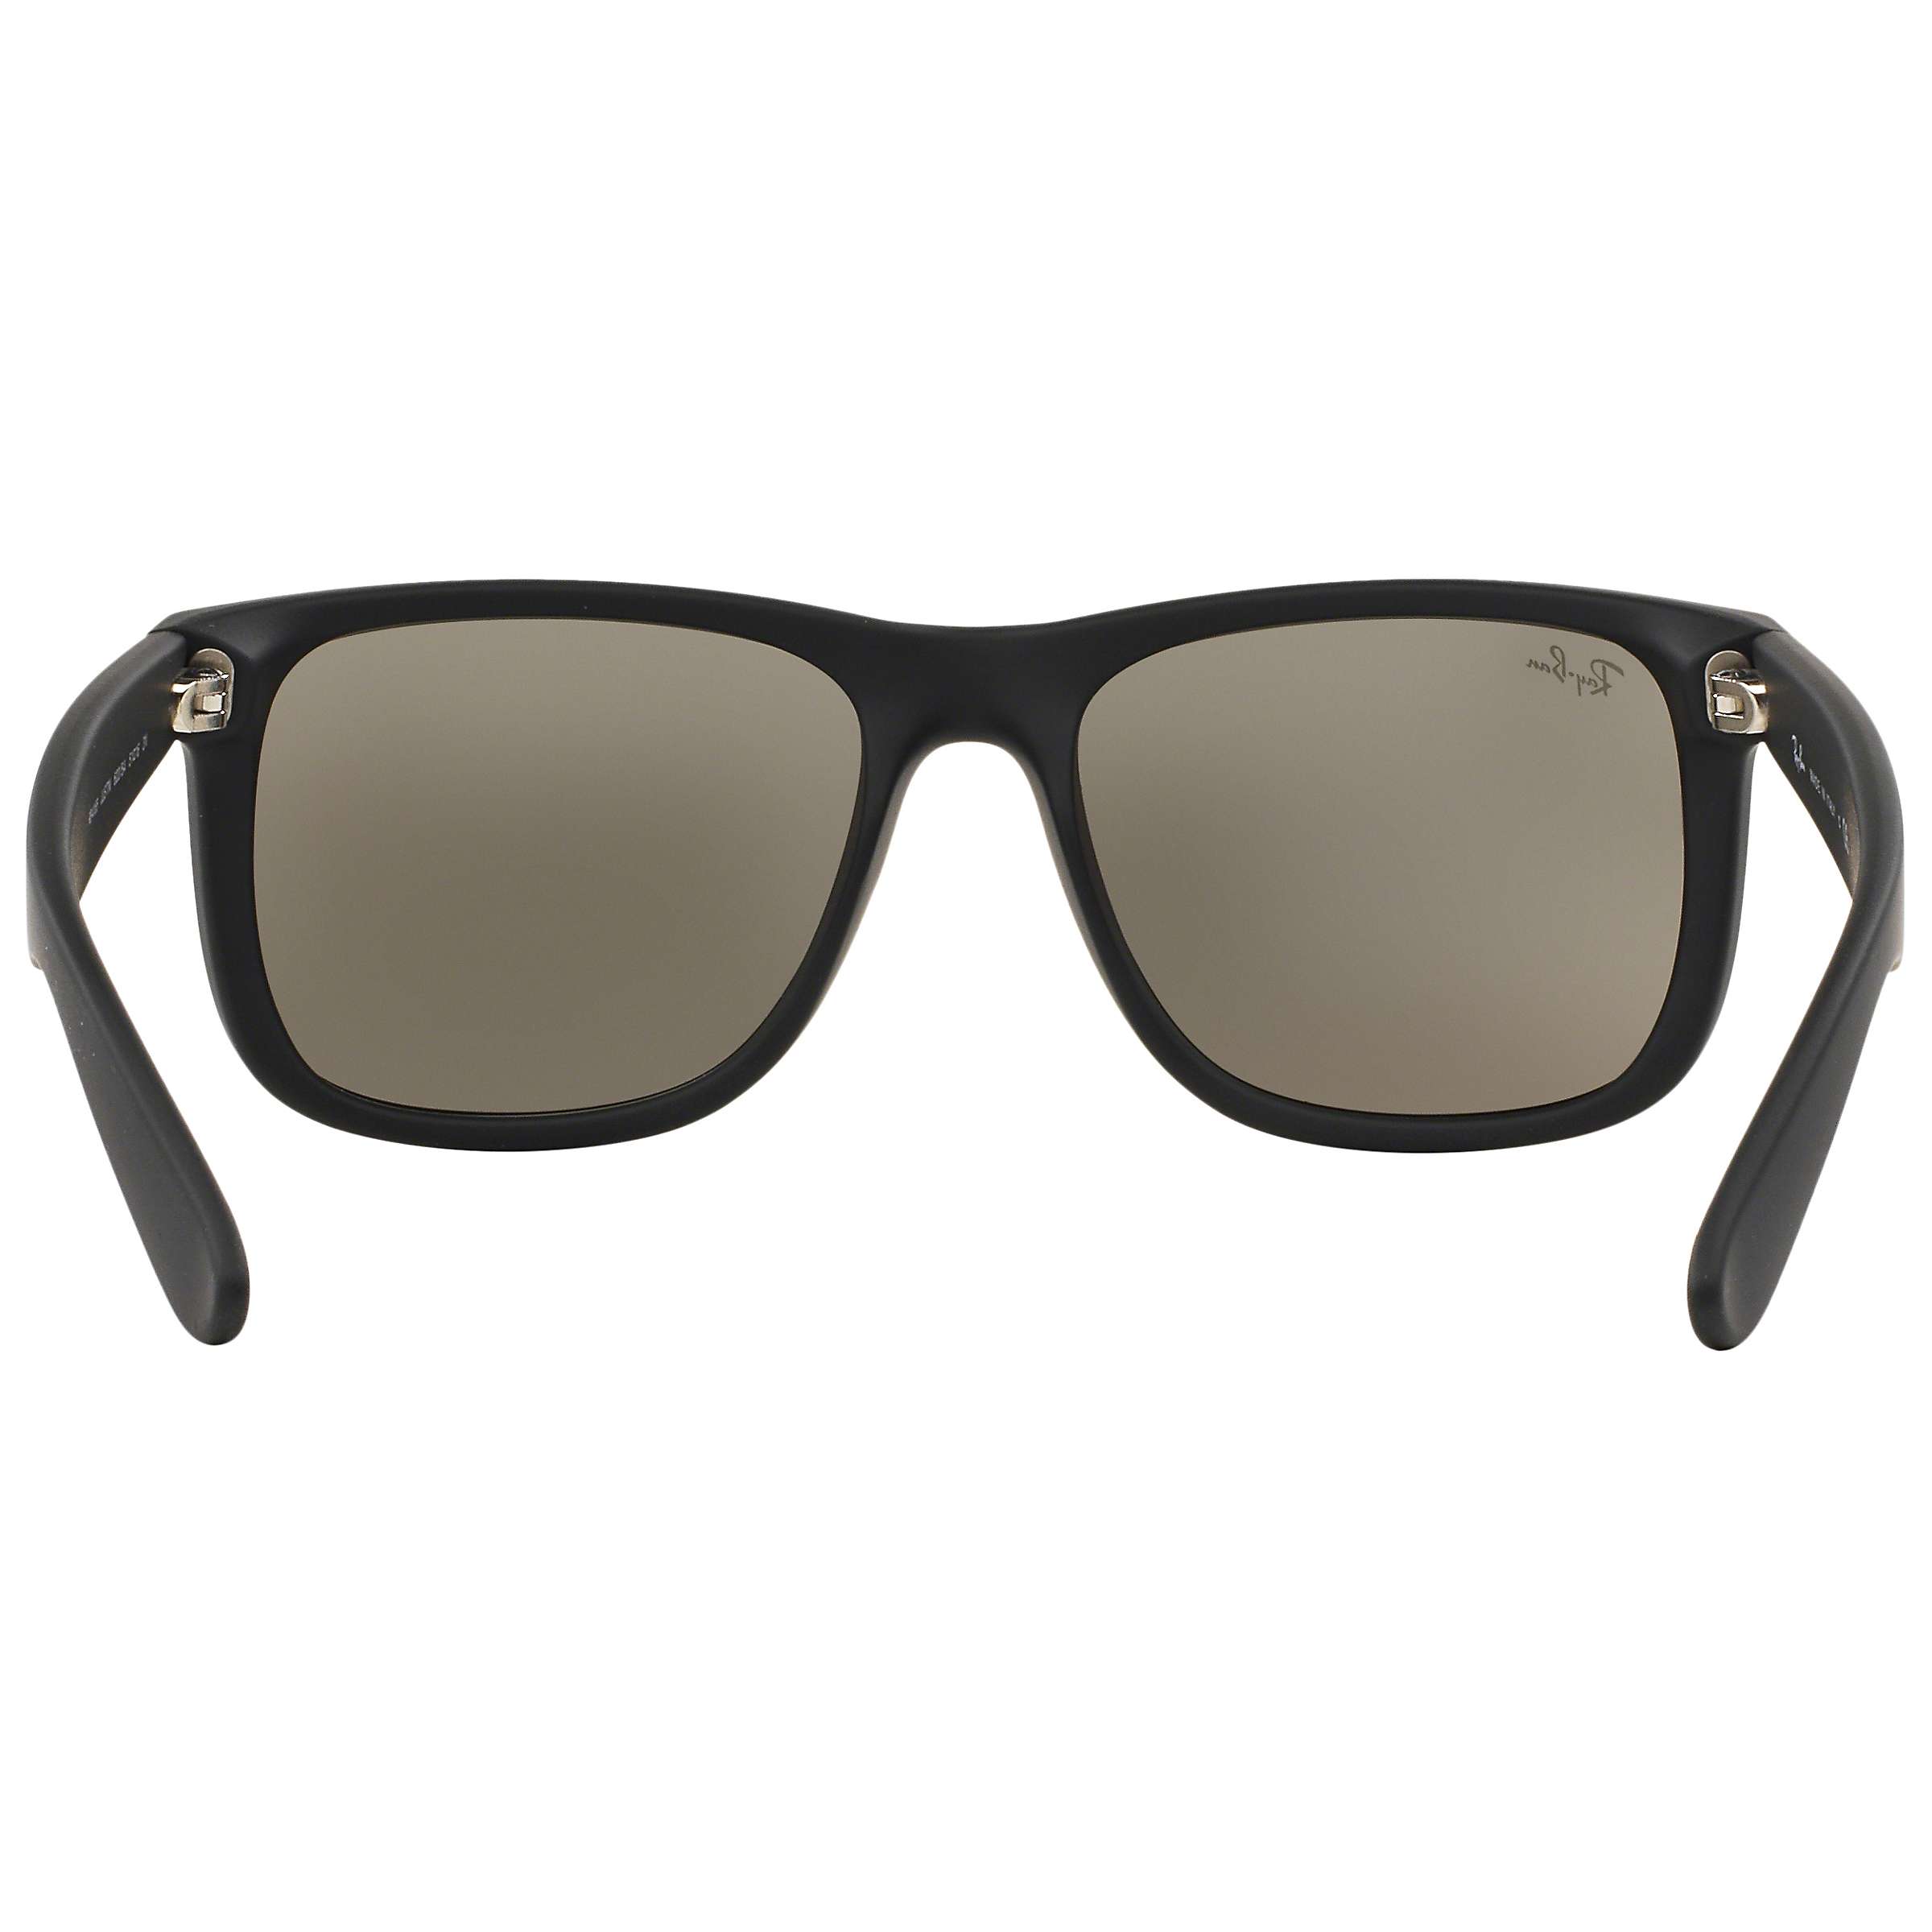 Buy Ray-Ban RB4165 Men's Justin Rectangular Sunglasses Online at johnlewis.com